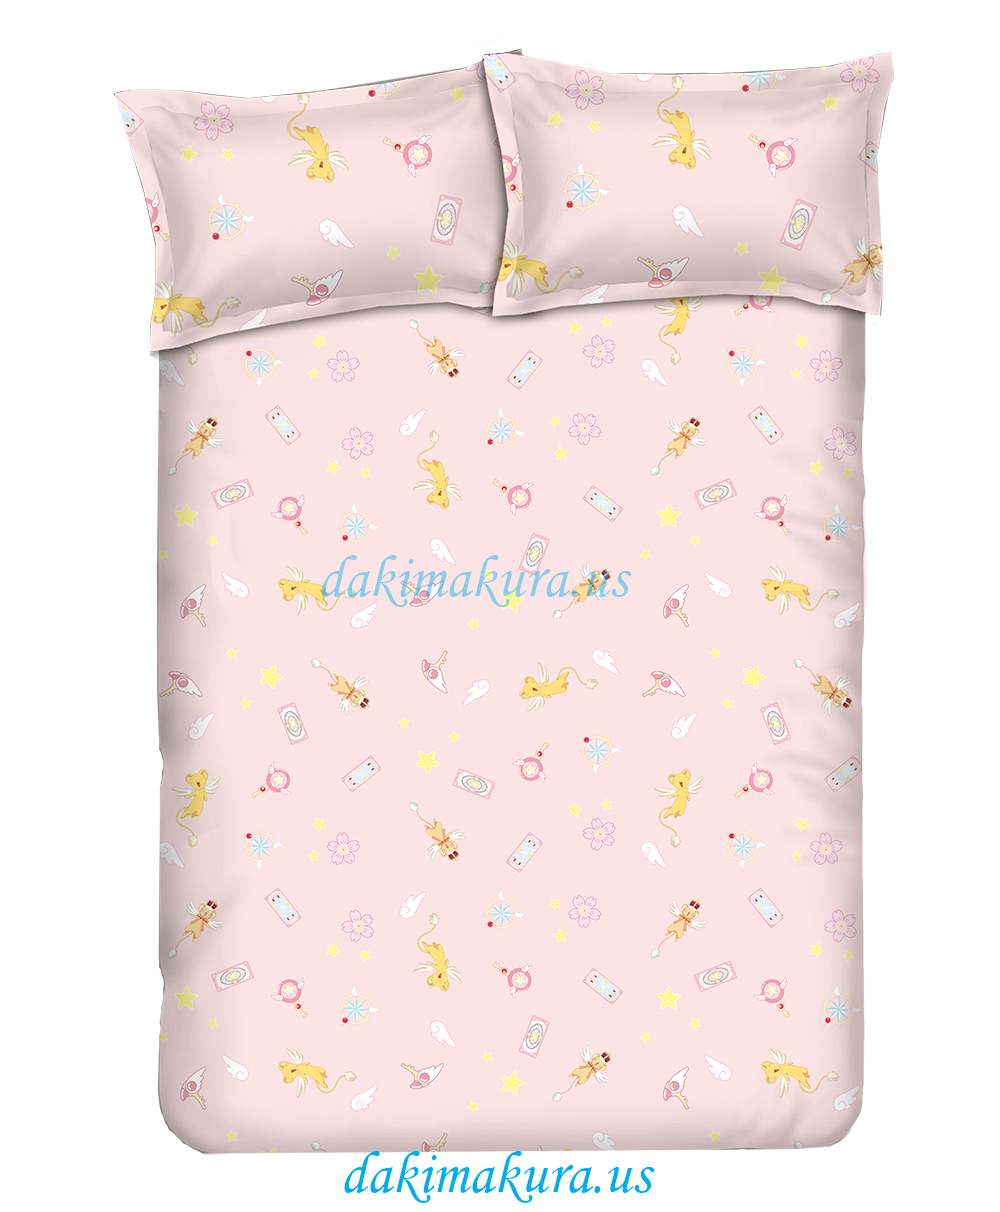 Cheap Cardcaptor Sakura ชุดเครื่องนอนอะนิเมะหนังผ้าห่มและผ้าห่มปกผ้าปูที่นอนหมอนครอบคลุมจากโรงงานจีน